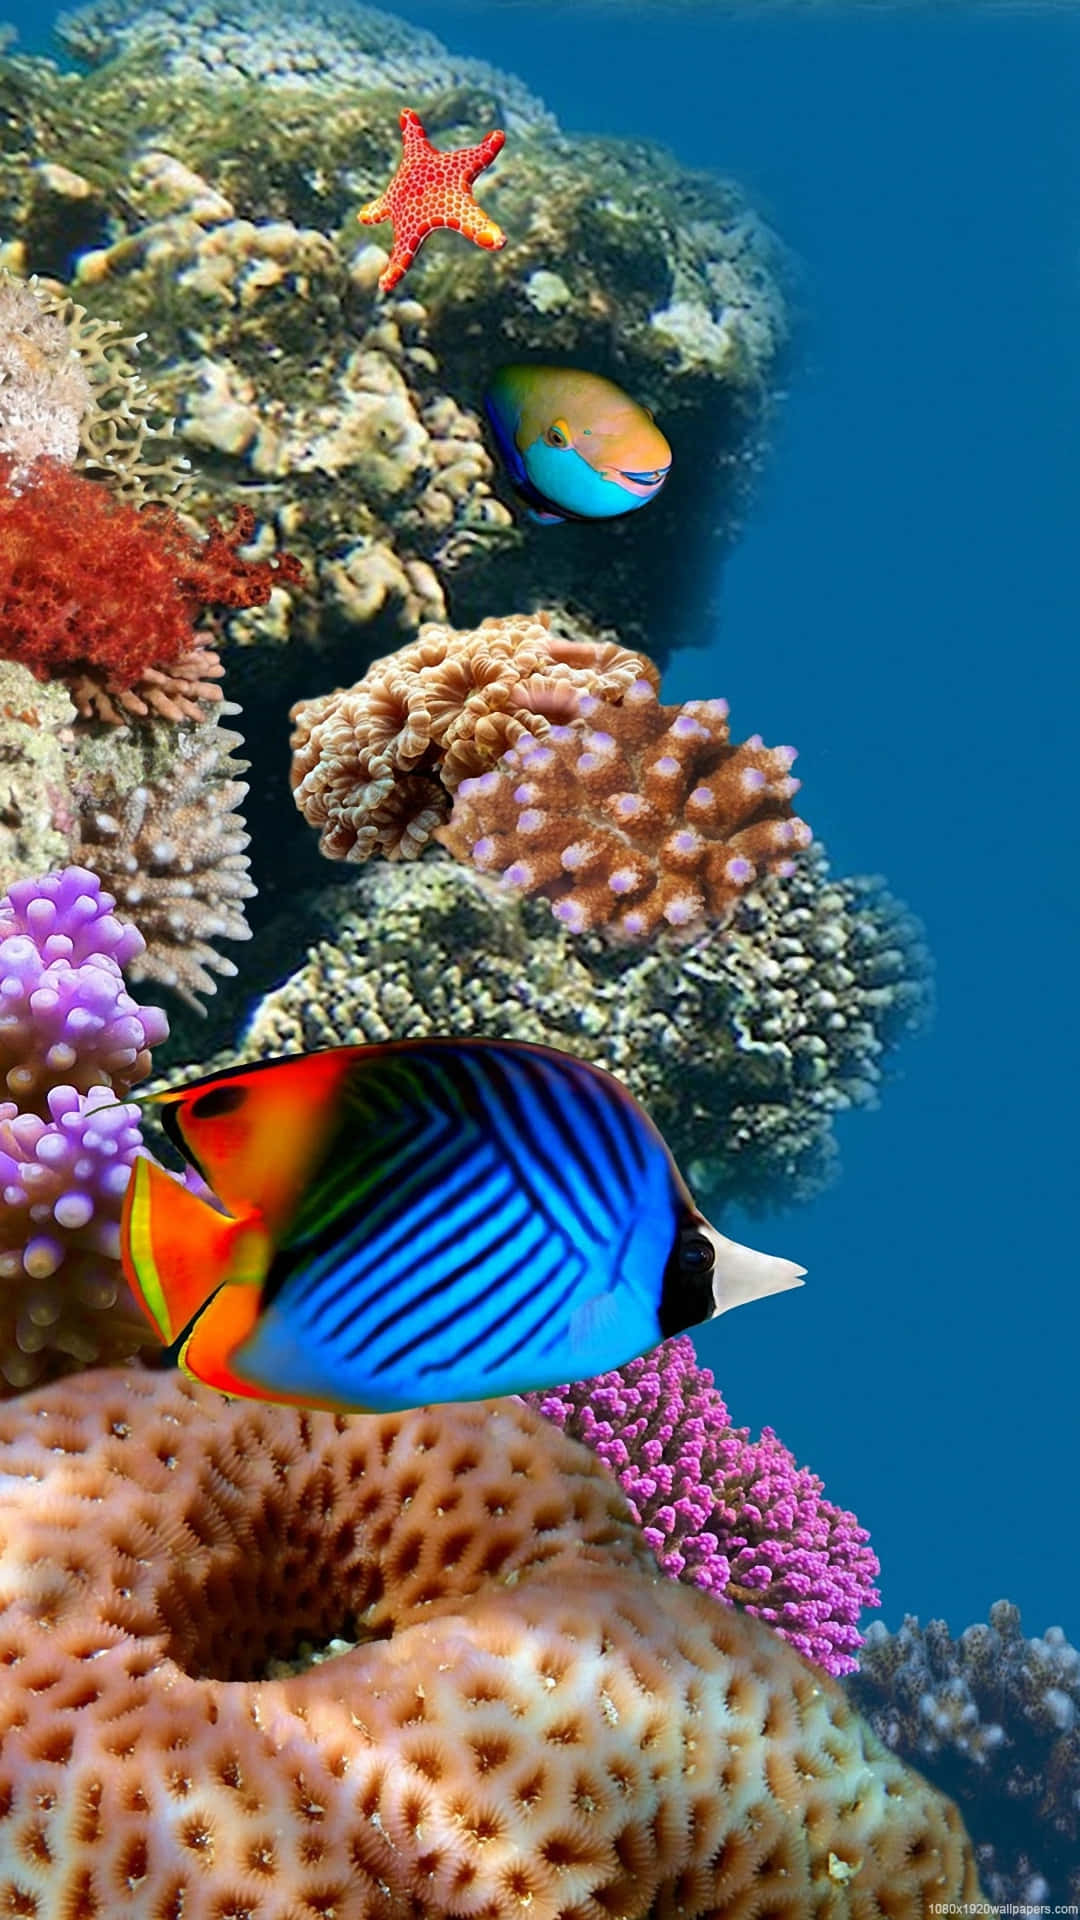 Enjoy beautiful, calming views on your iPhone with the Aquarium app! Wallpaper